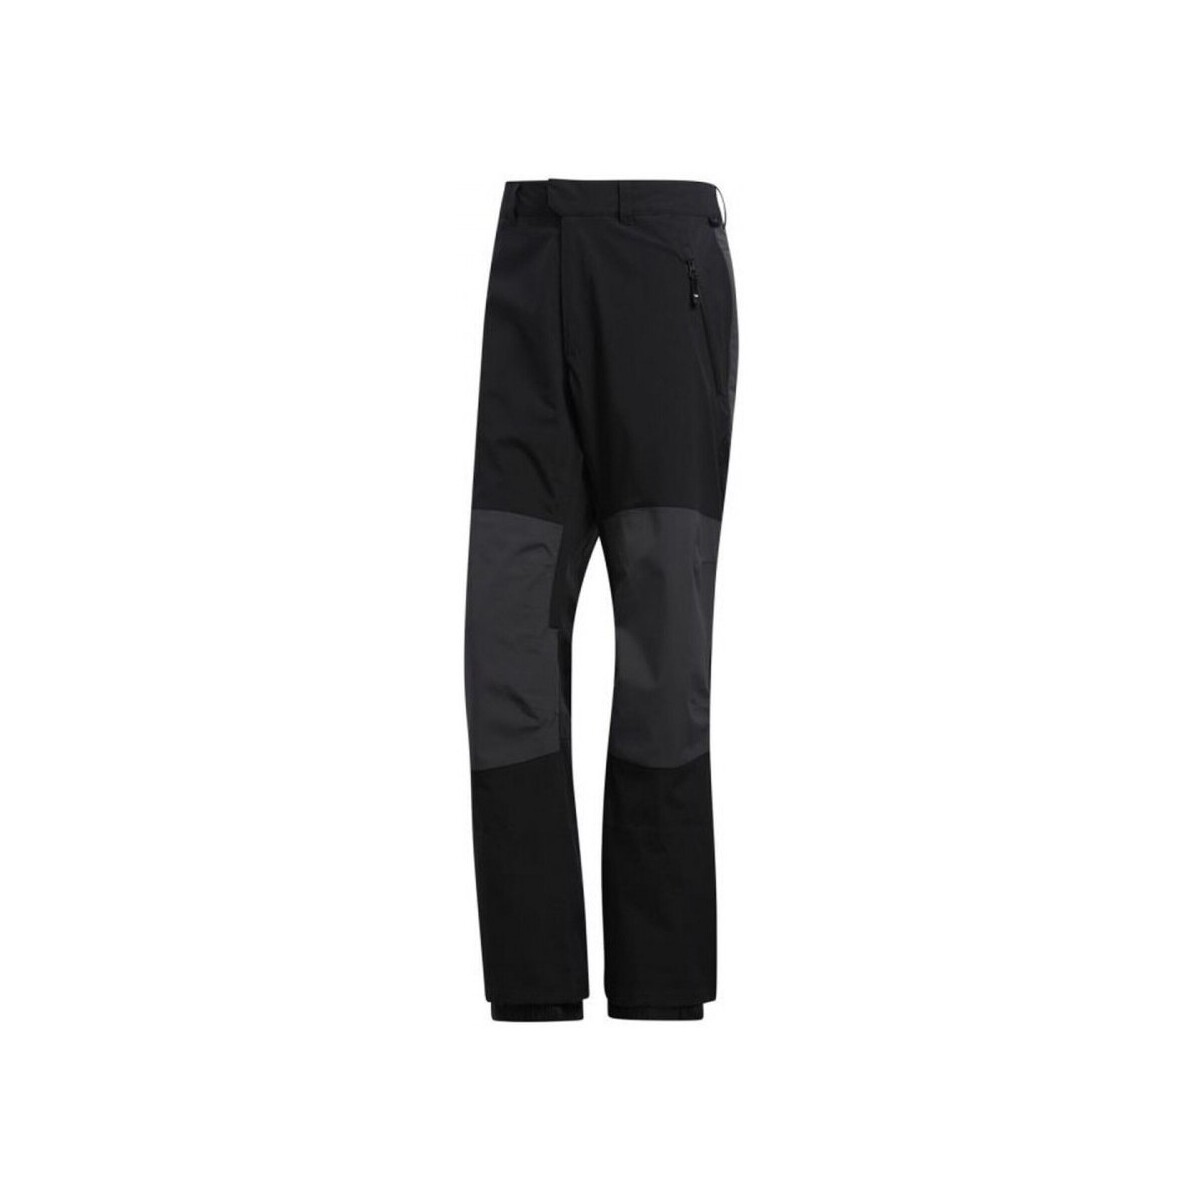 Textiel Broeken / Pantalons adidas Originals 20K Fixed Pants Zwart